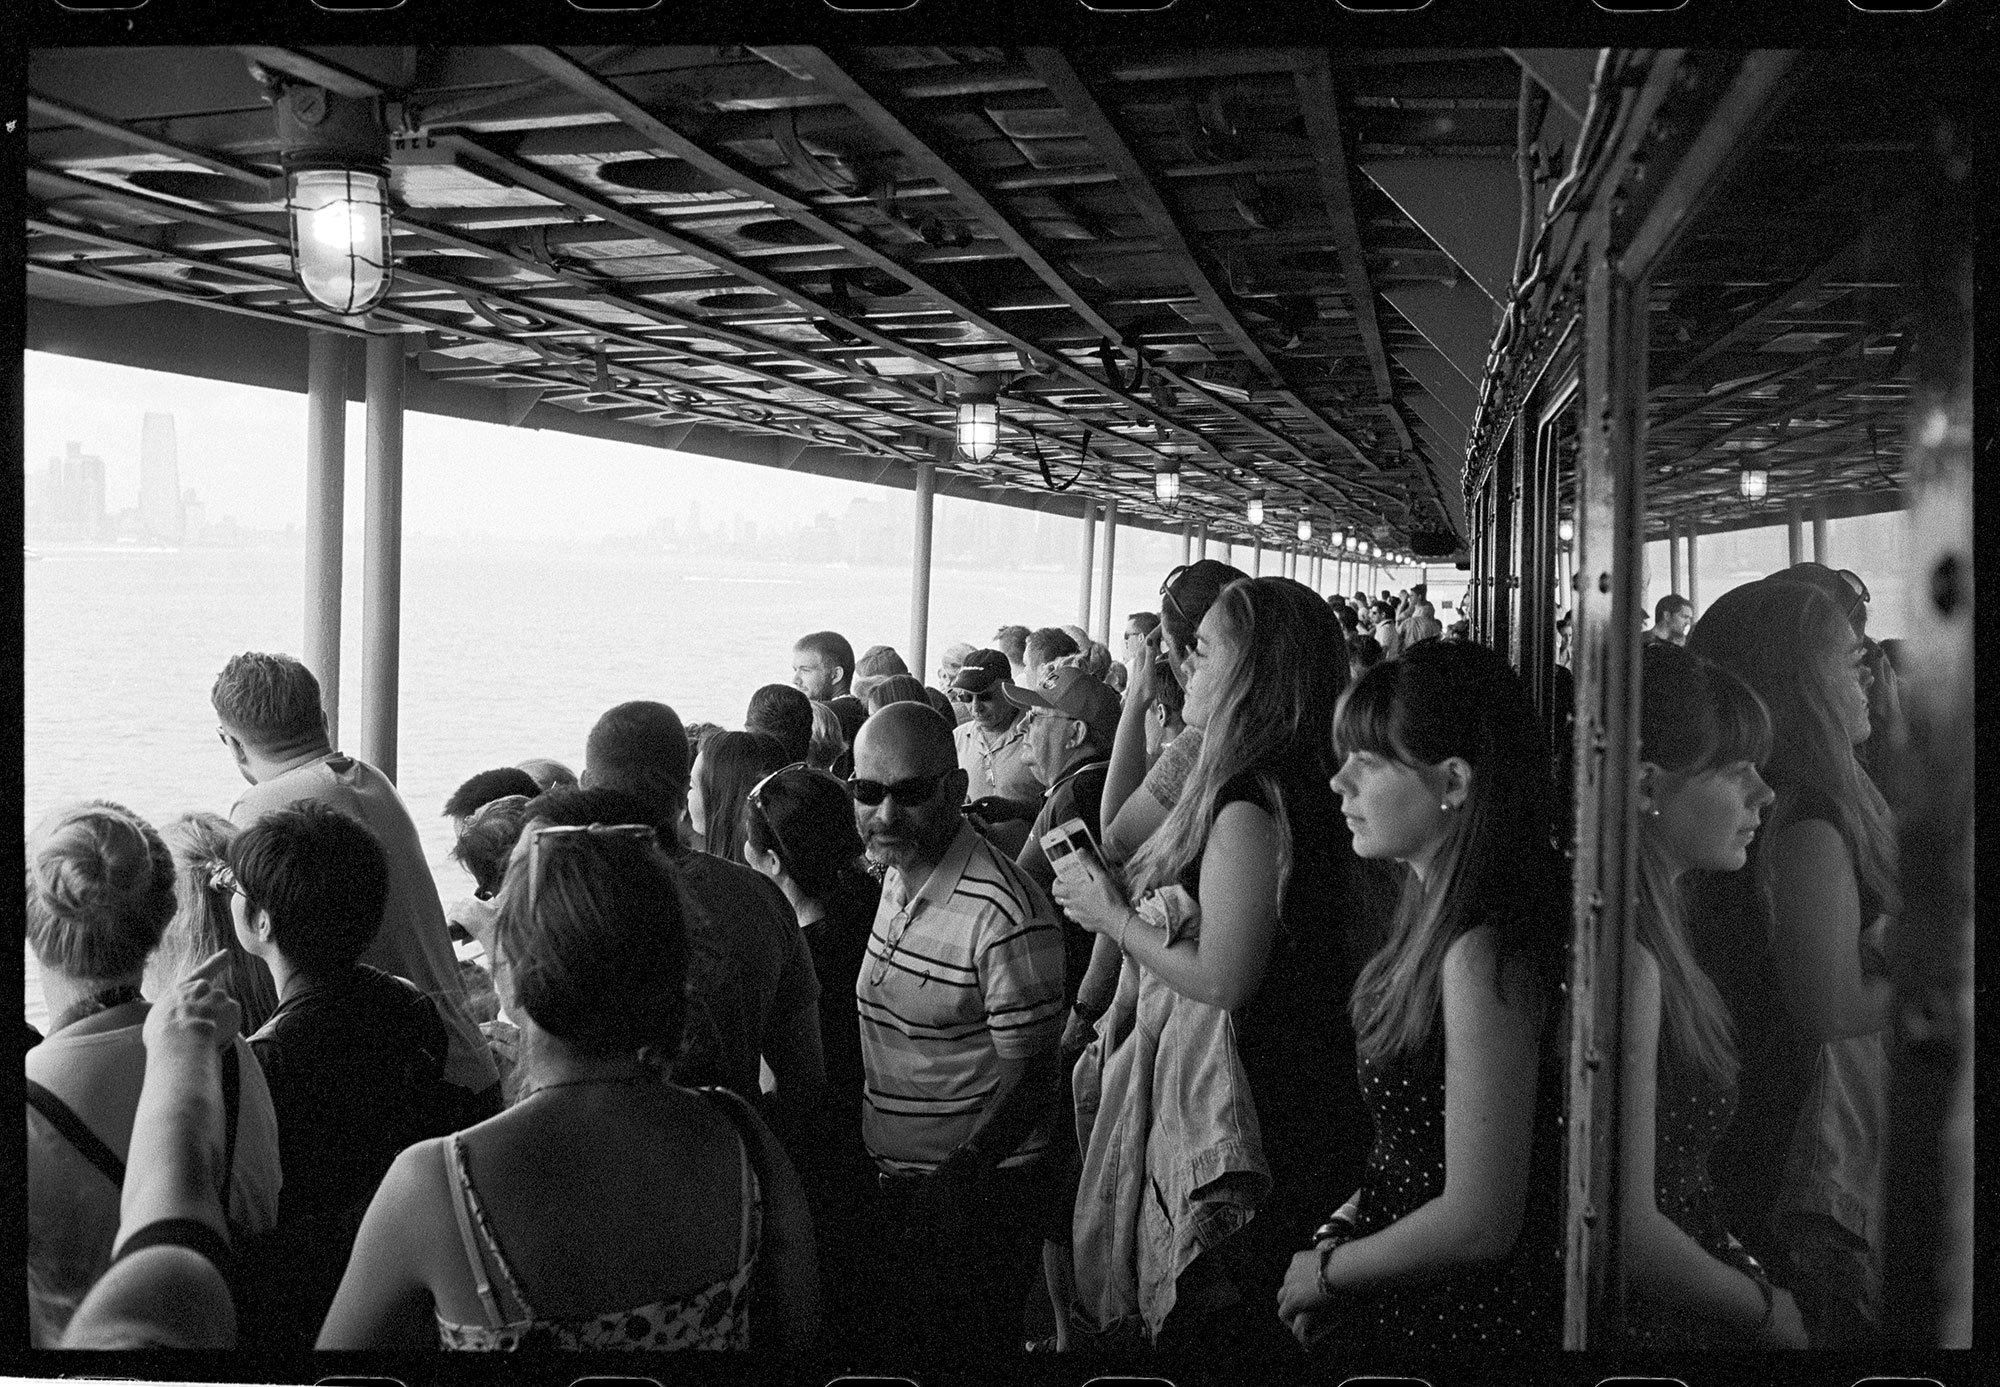 staten island ferry 08-31-16